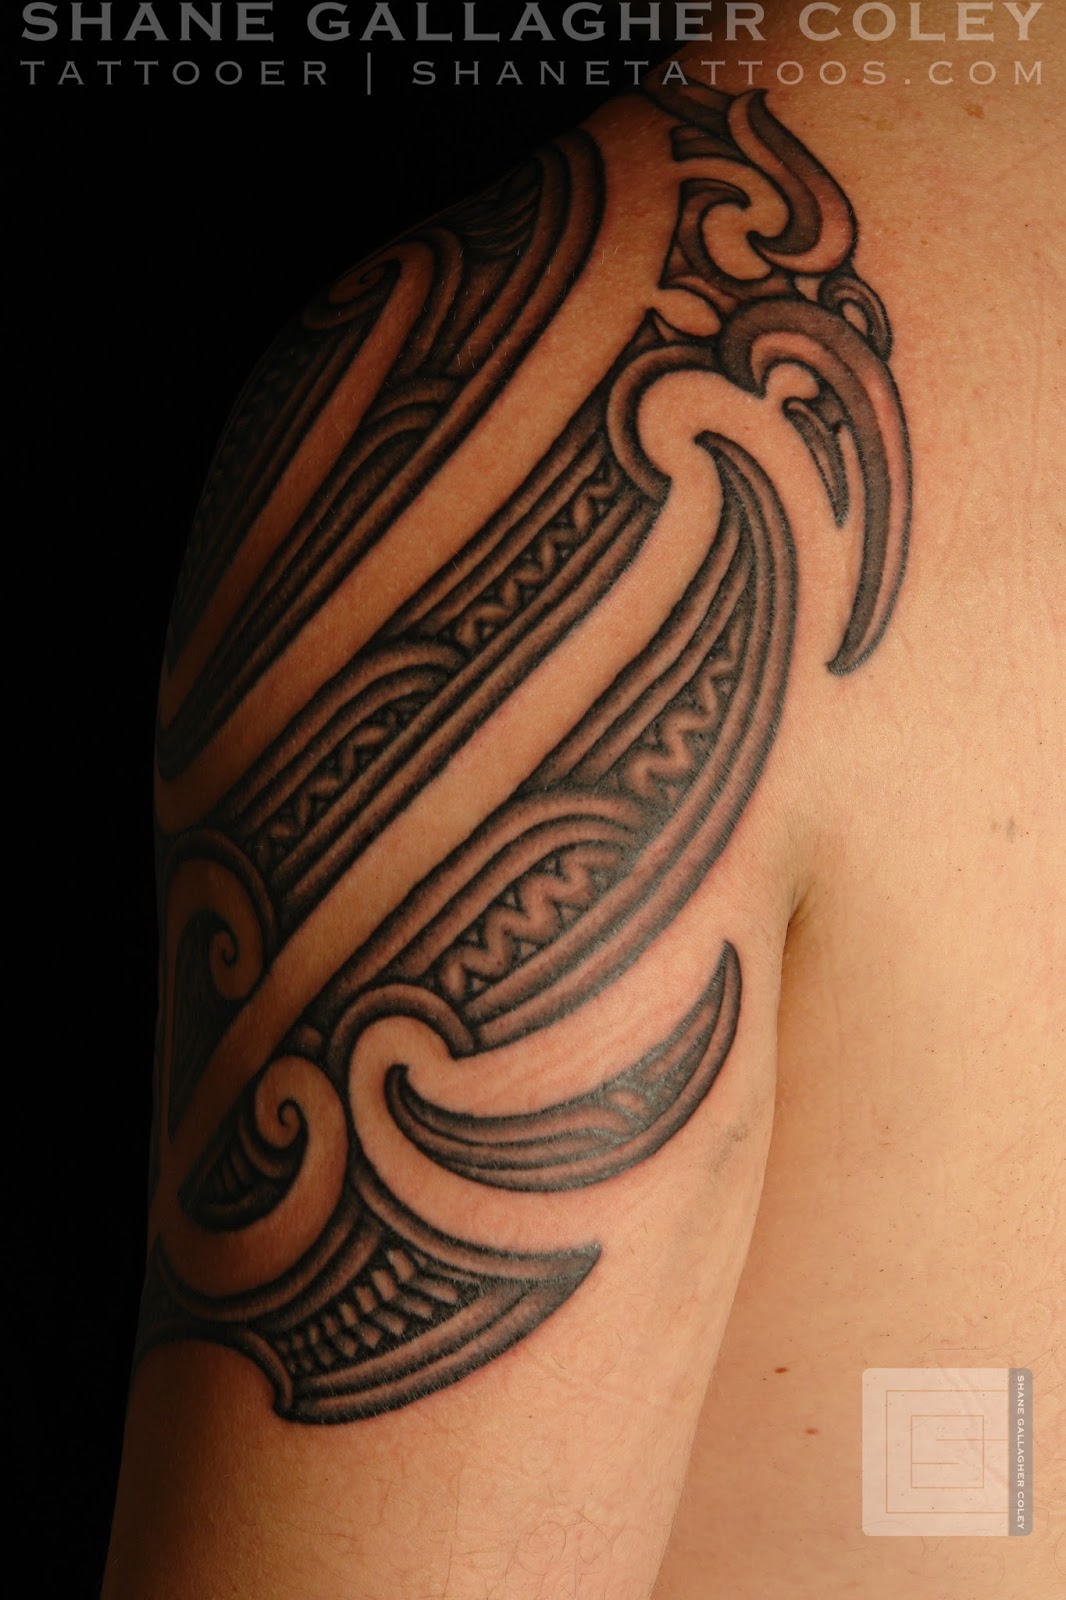 SHANE TATTOOS: Maori Shoulder Tattoo/Ta Moko